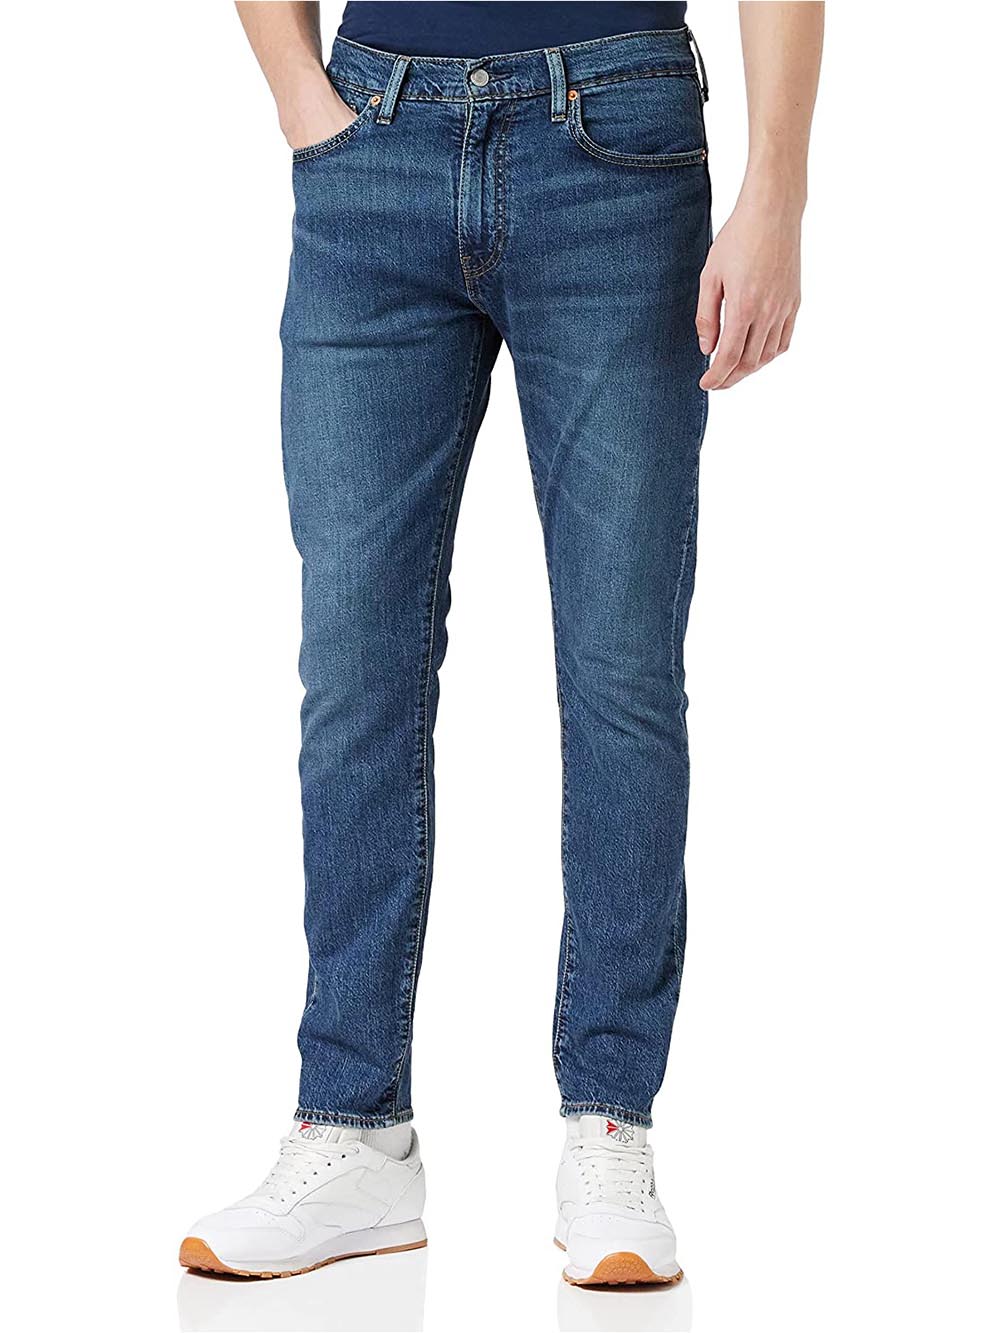 Levi's Jeans Uomo 512 Slim Taper 28833 Scuro